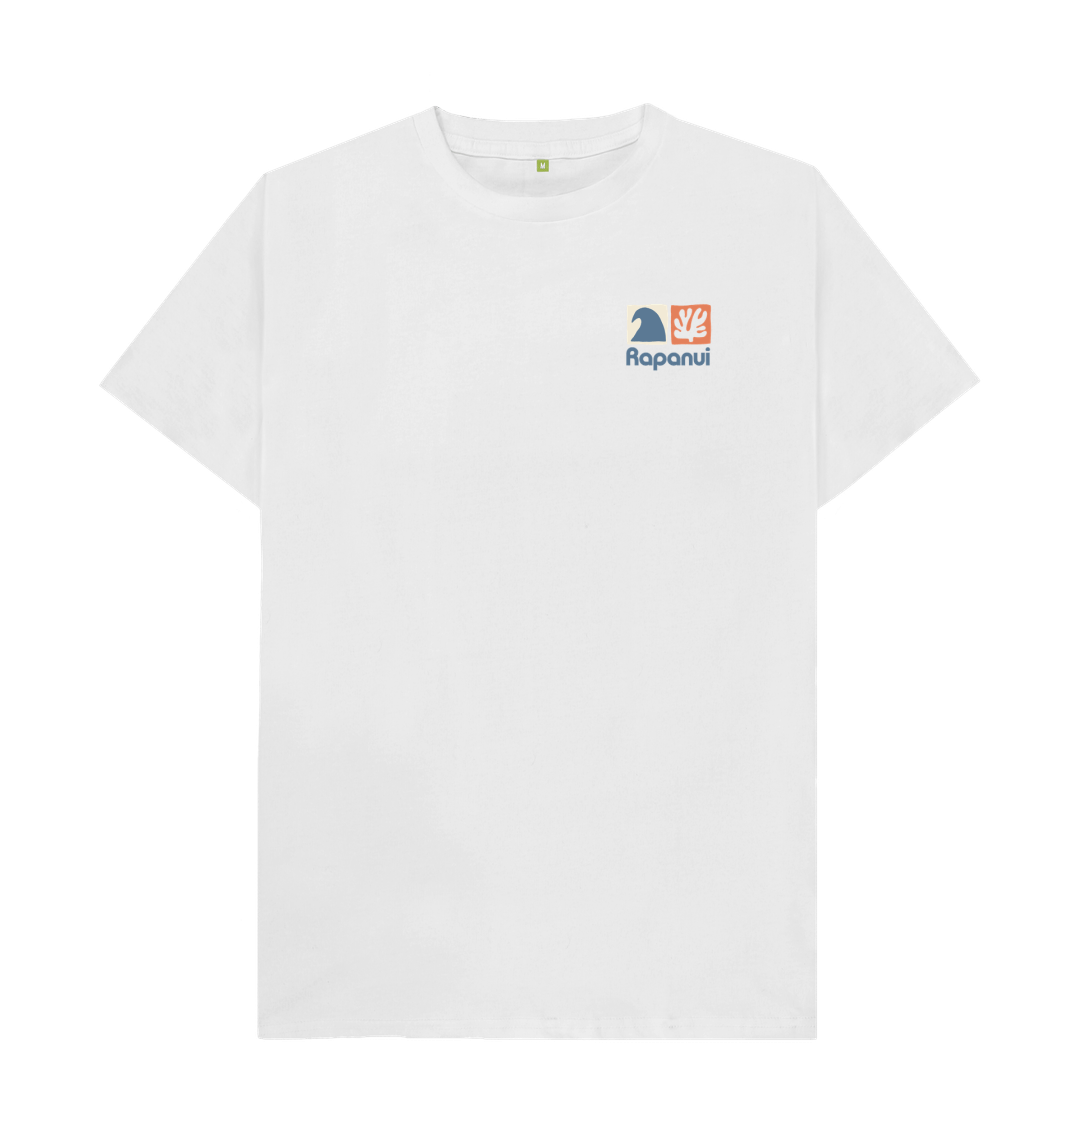 Life Outside T - Shirt - Printed T - shirt